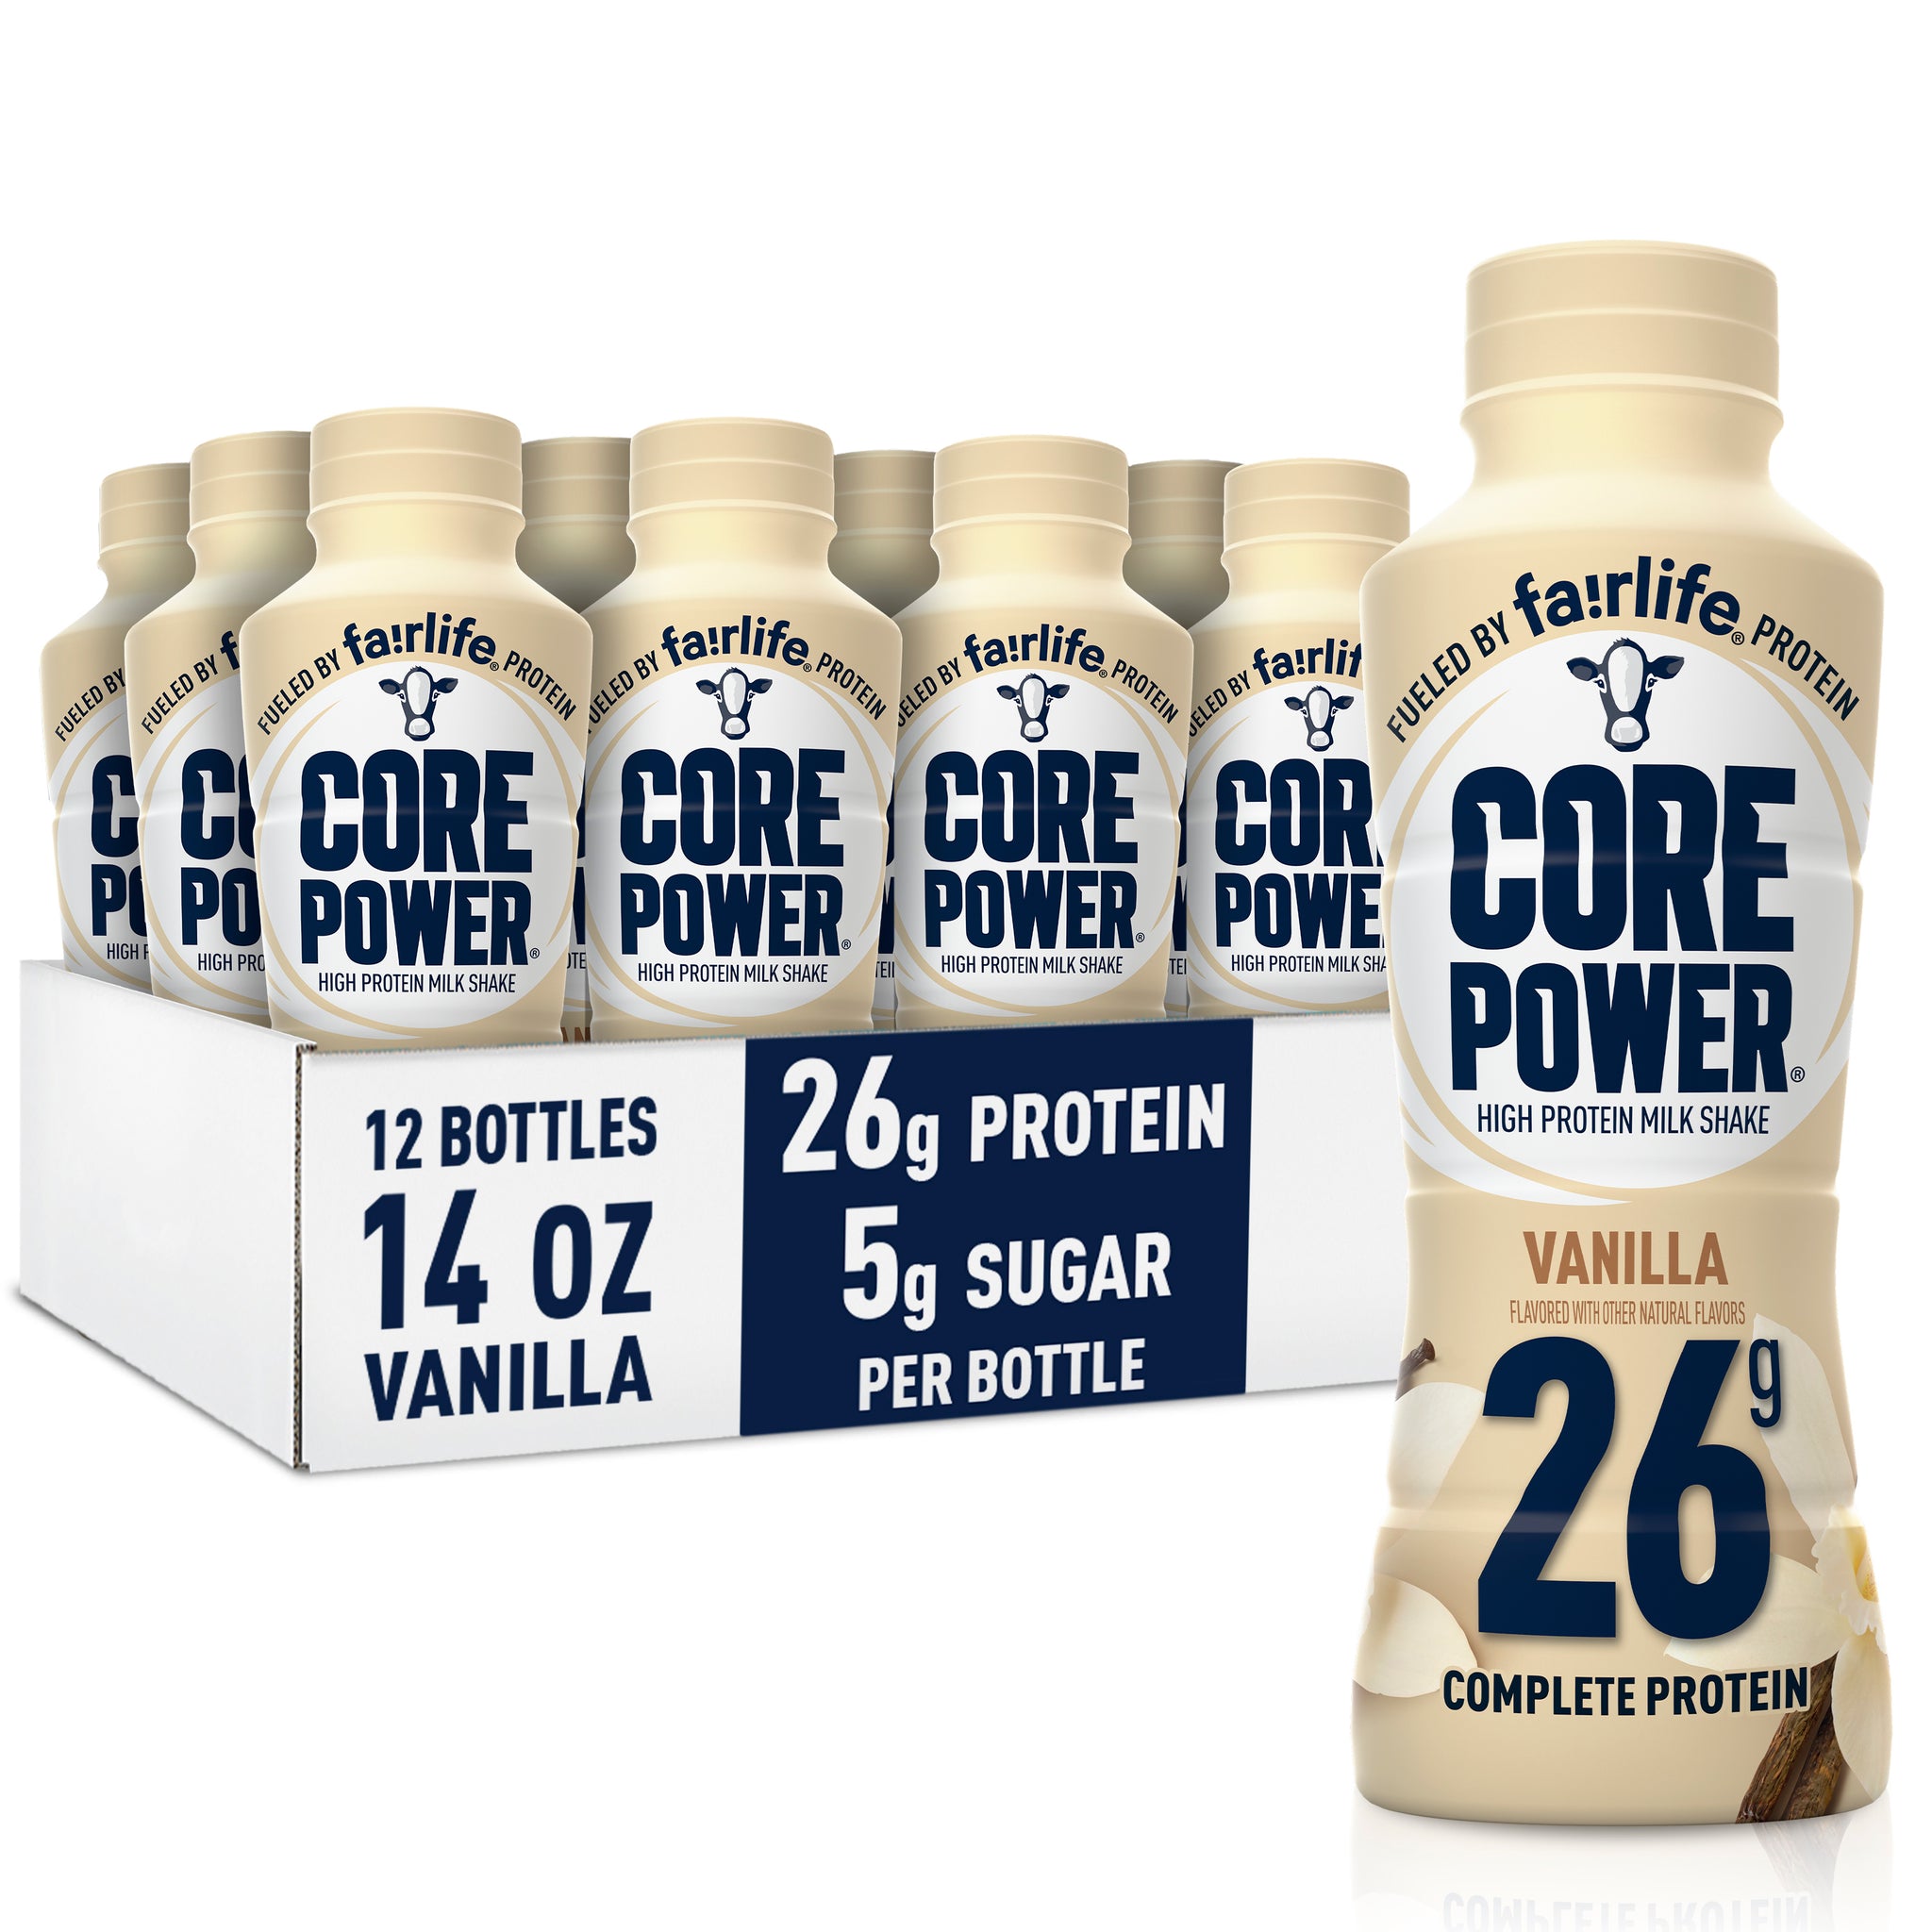 Vanilla Protein Shake (11.5oz)